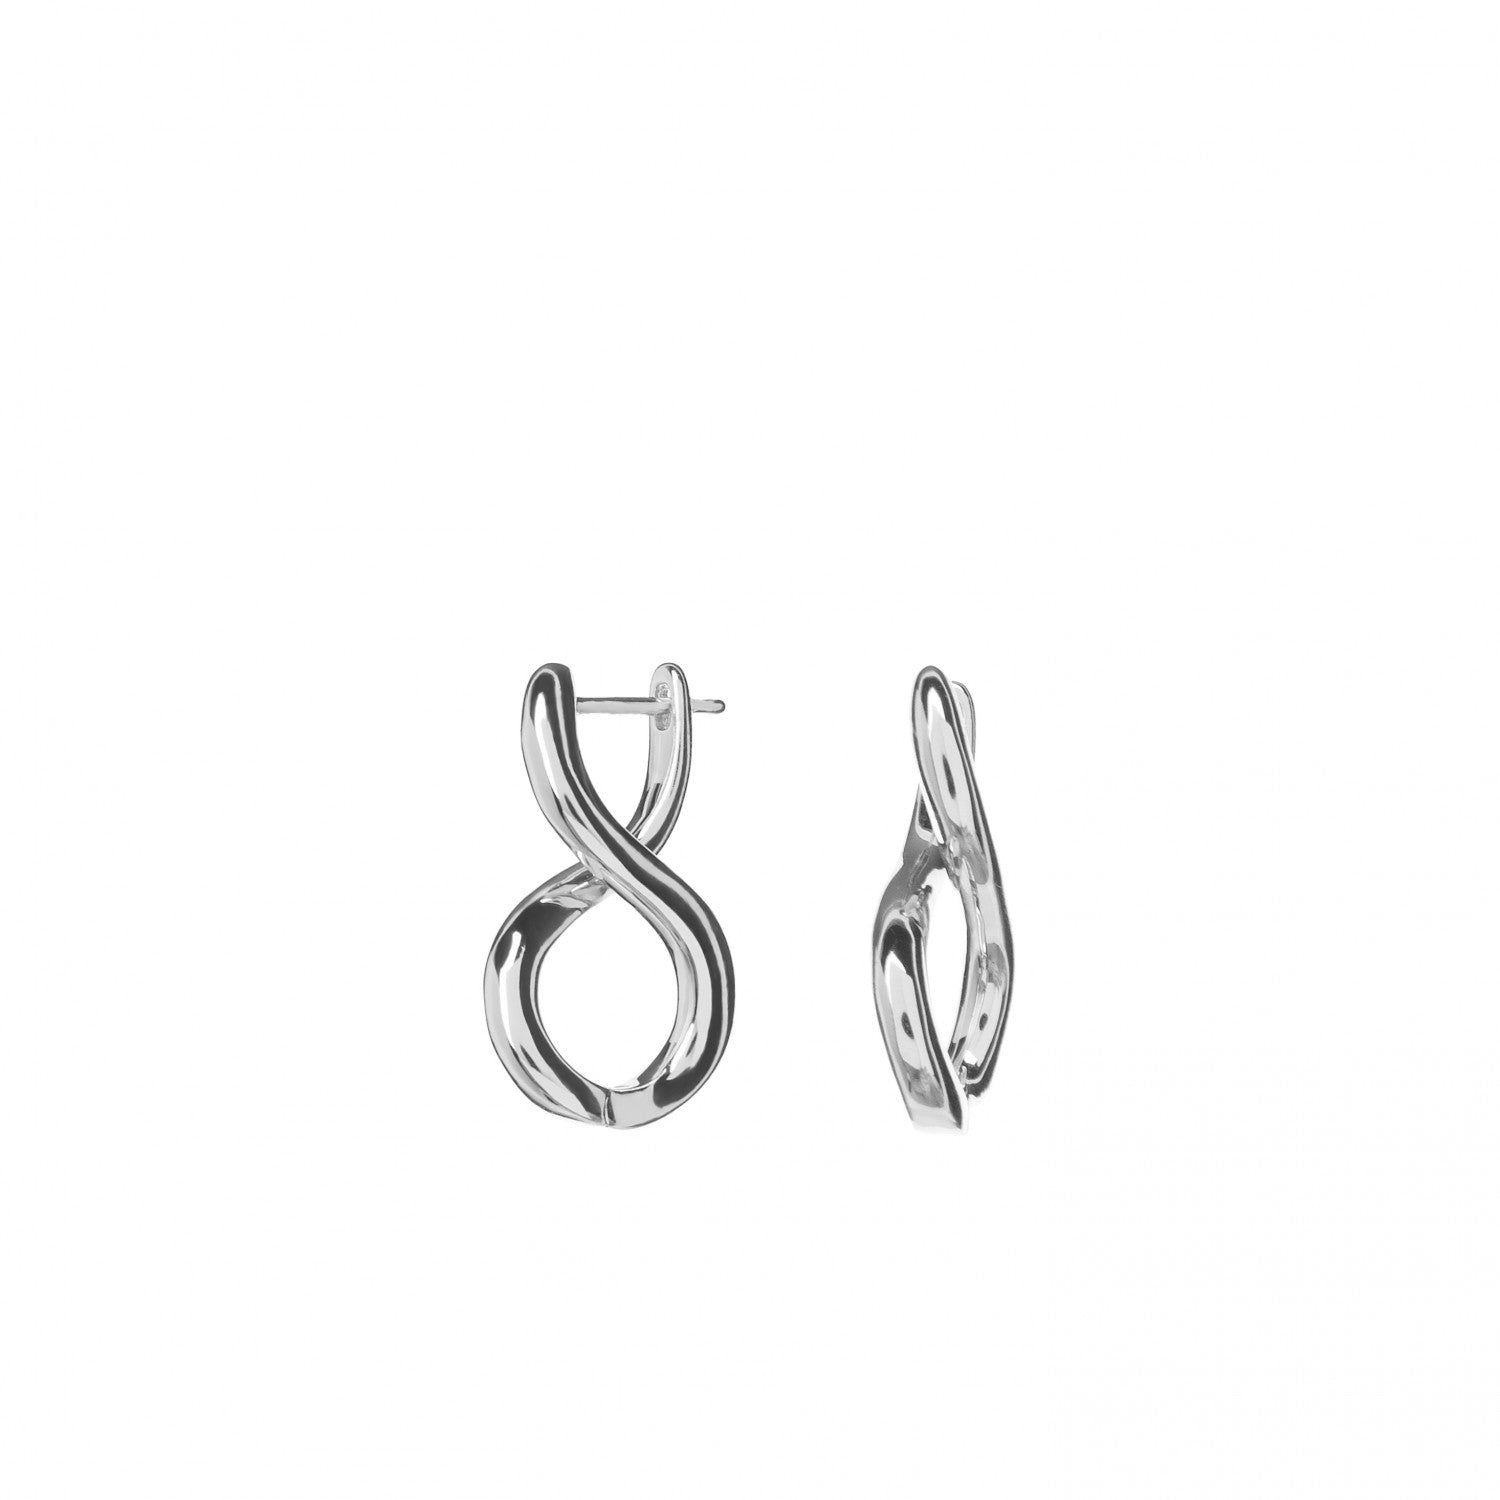 Original plain silver earrings with crossed design